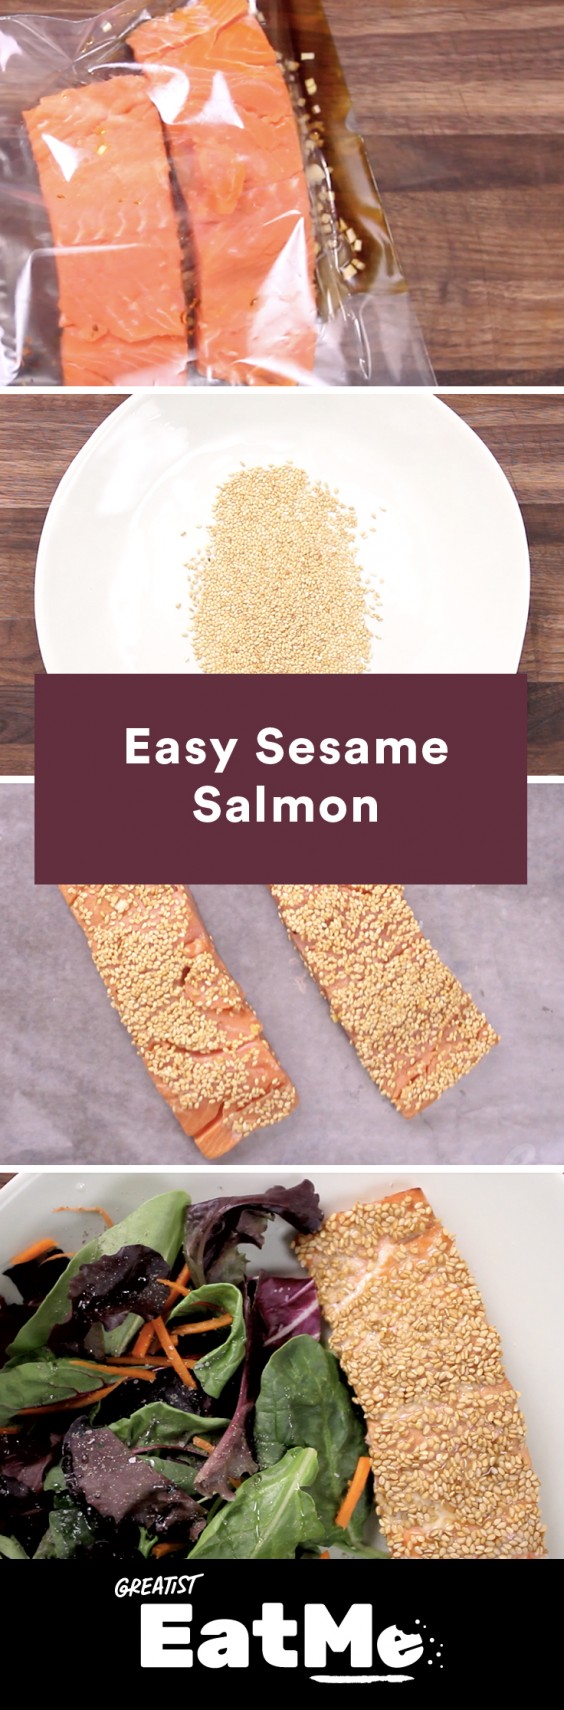 Eat Me Video: Sesame Salmon